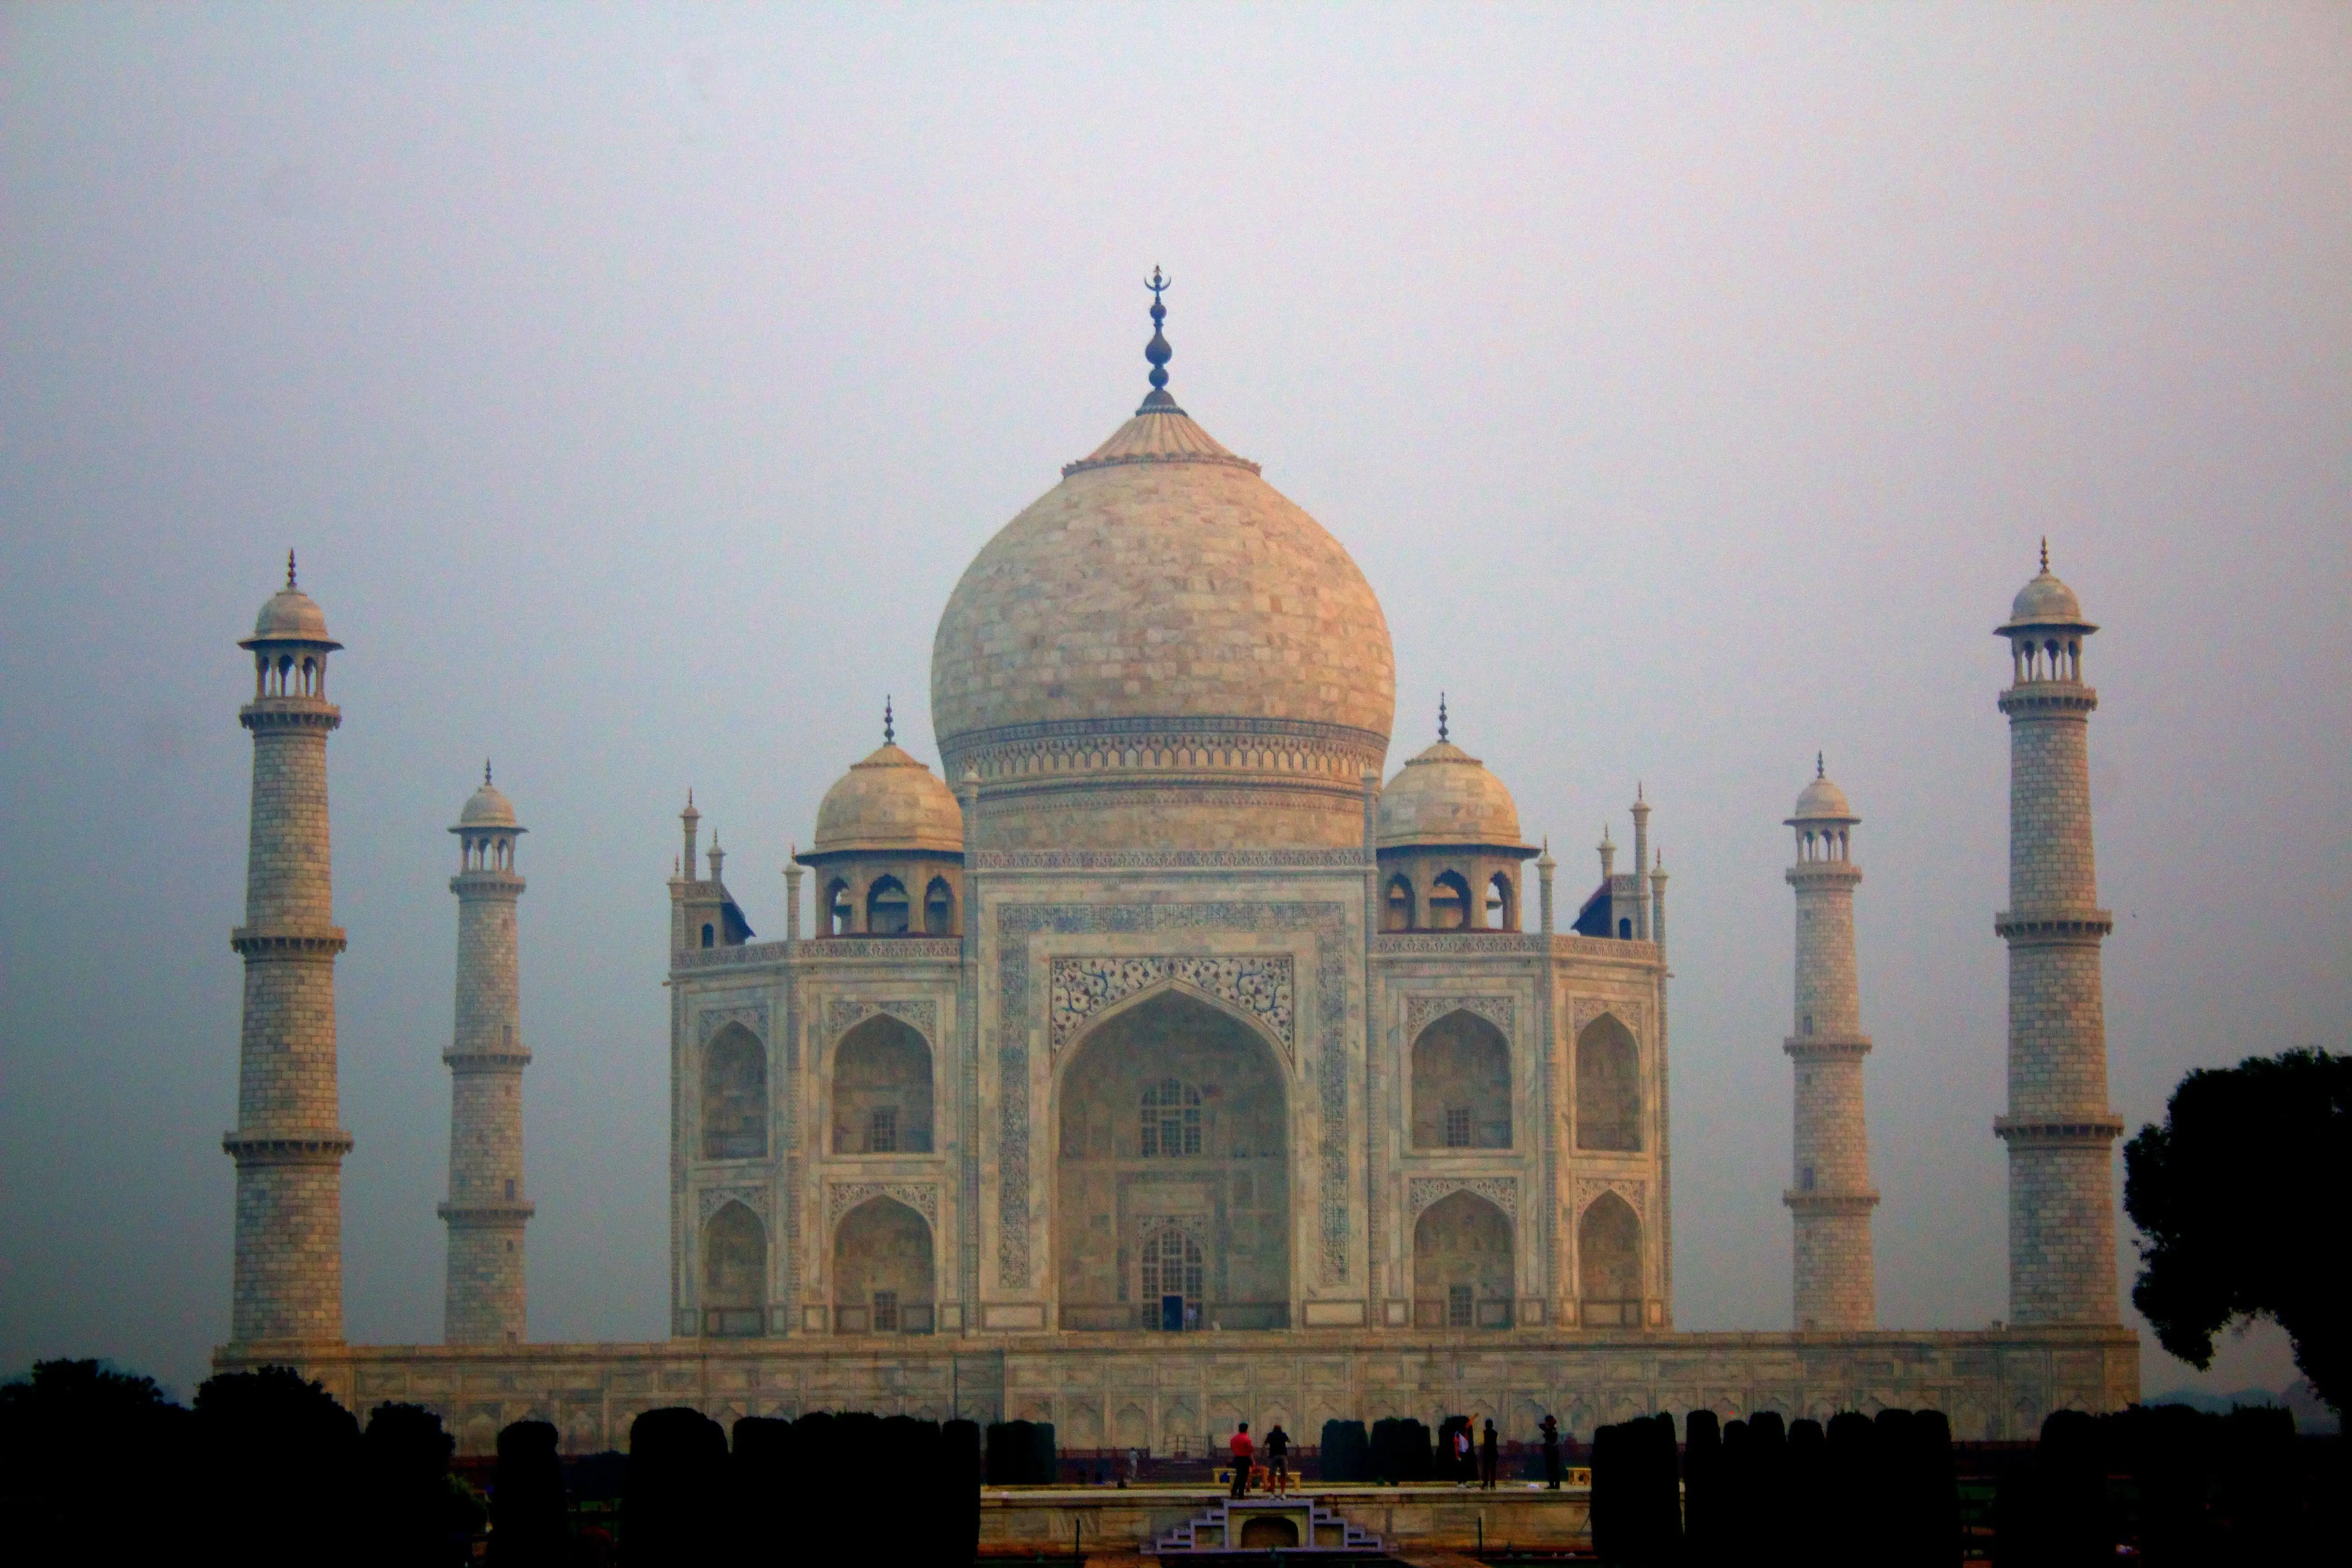 Sunrise Taj Mahal and Agra tour from Delhi by Car